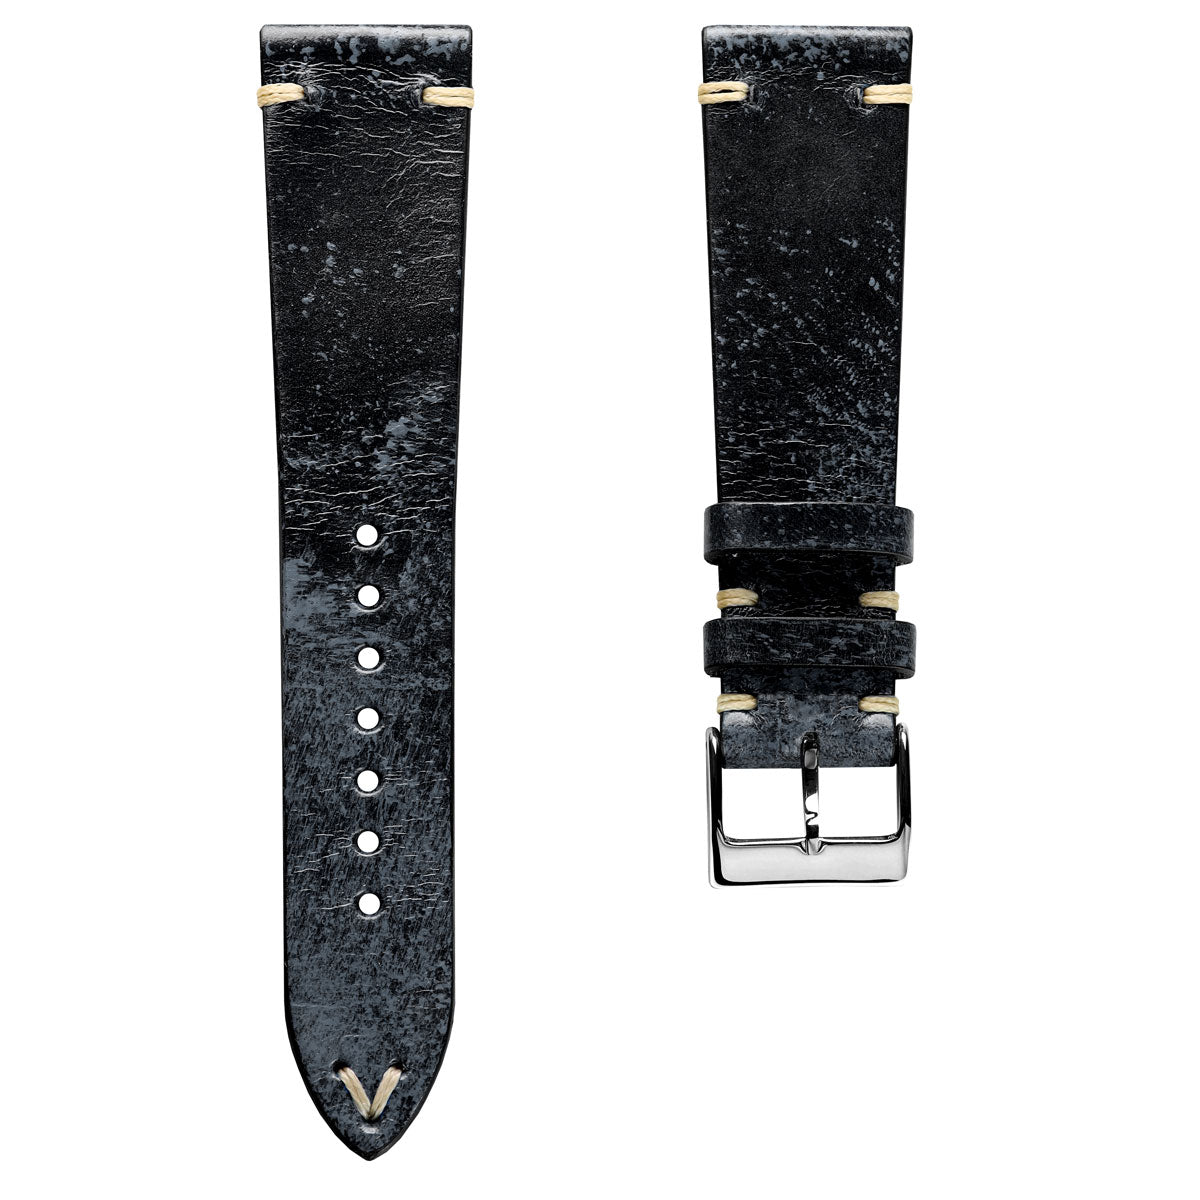 Radstock Vintage V-stitch Genuine Leather Watch Strap - Black